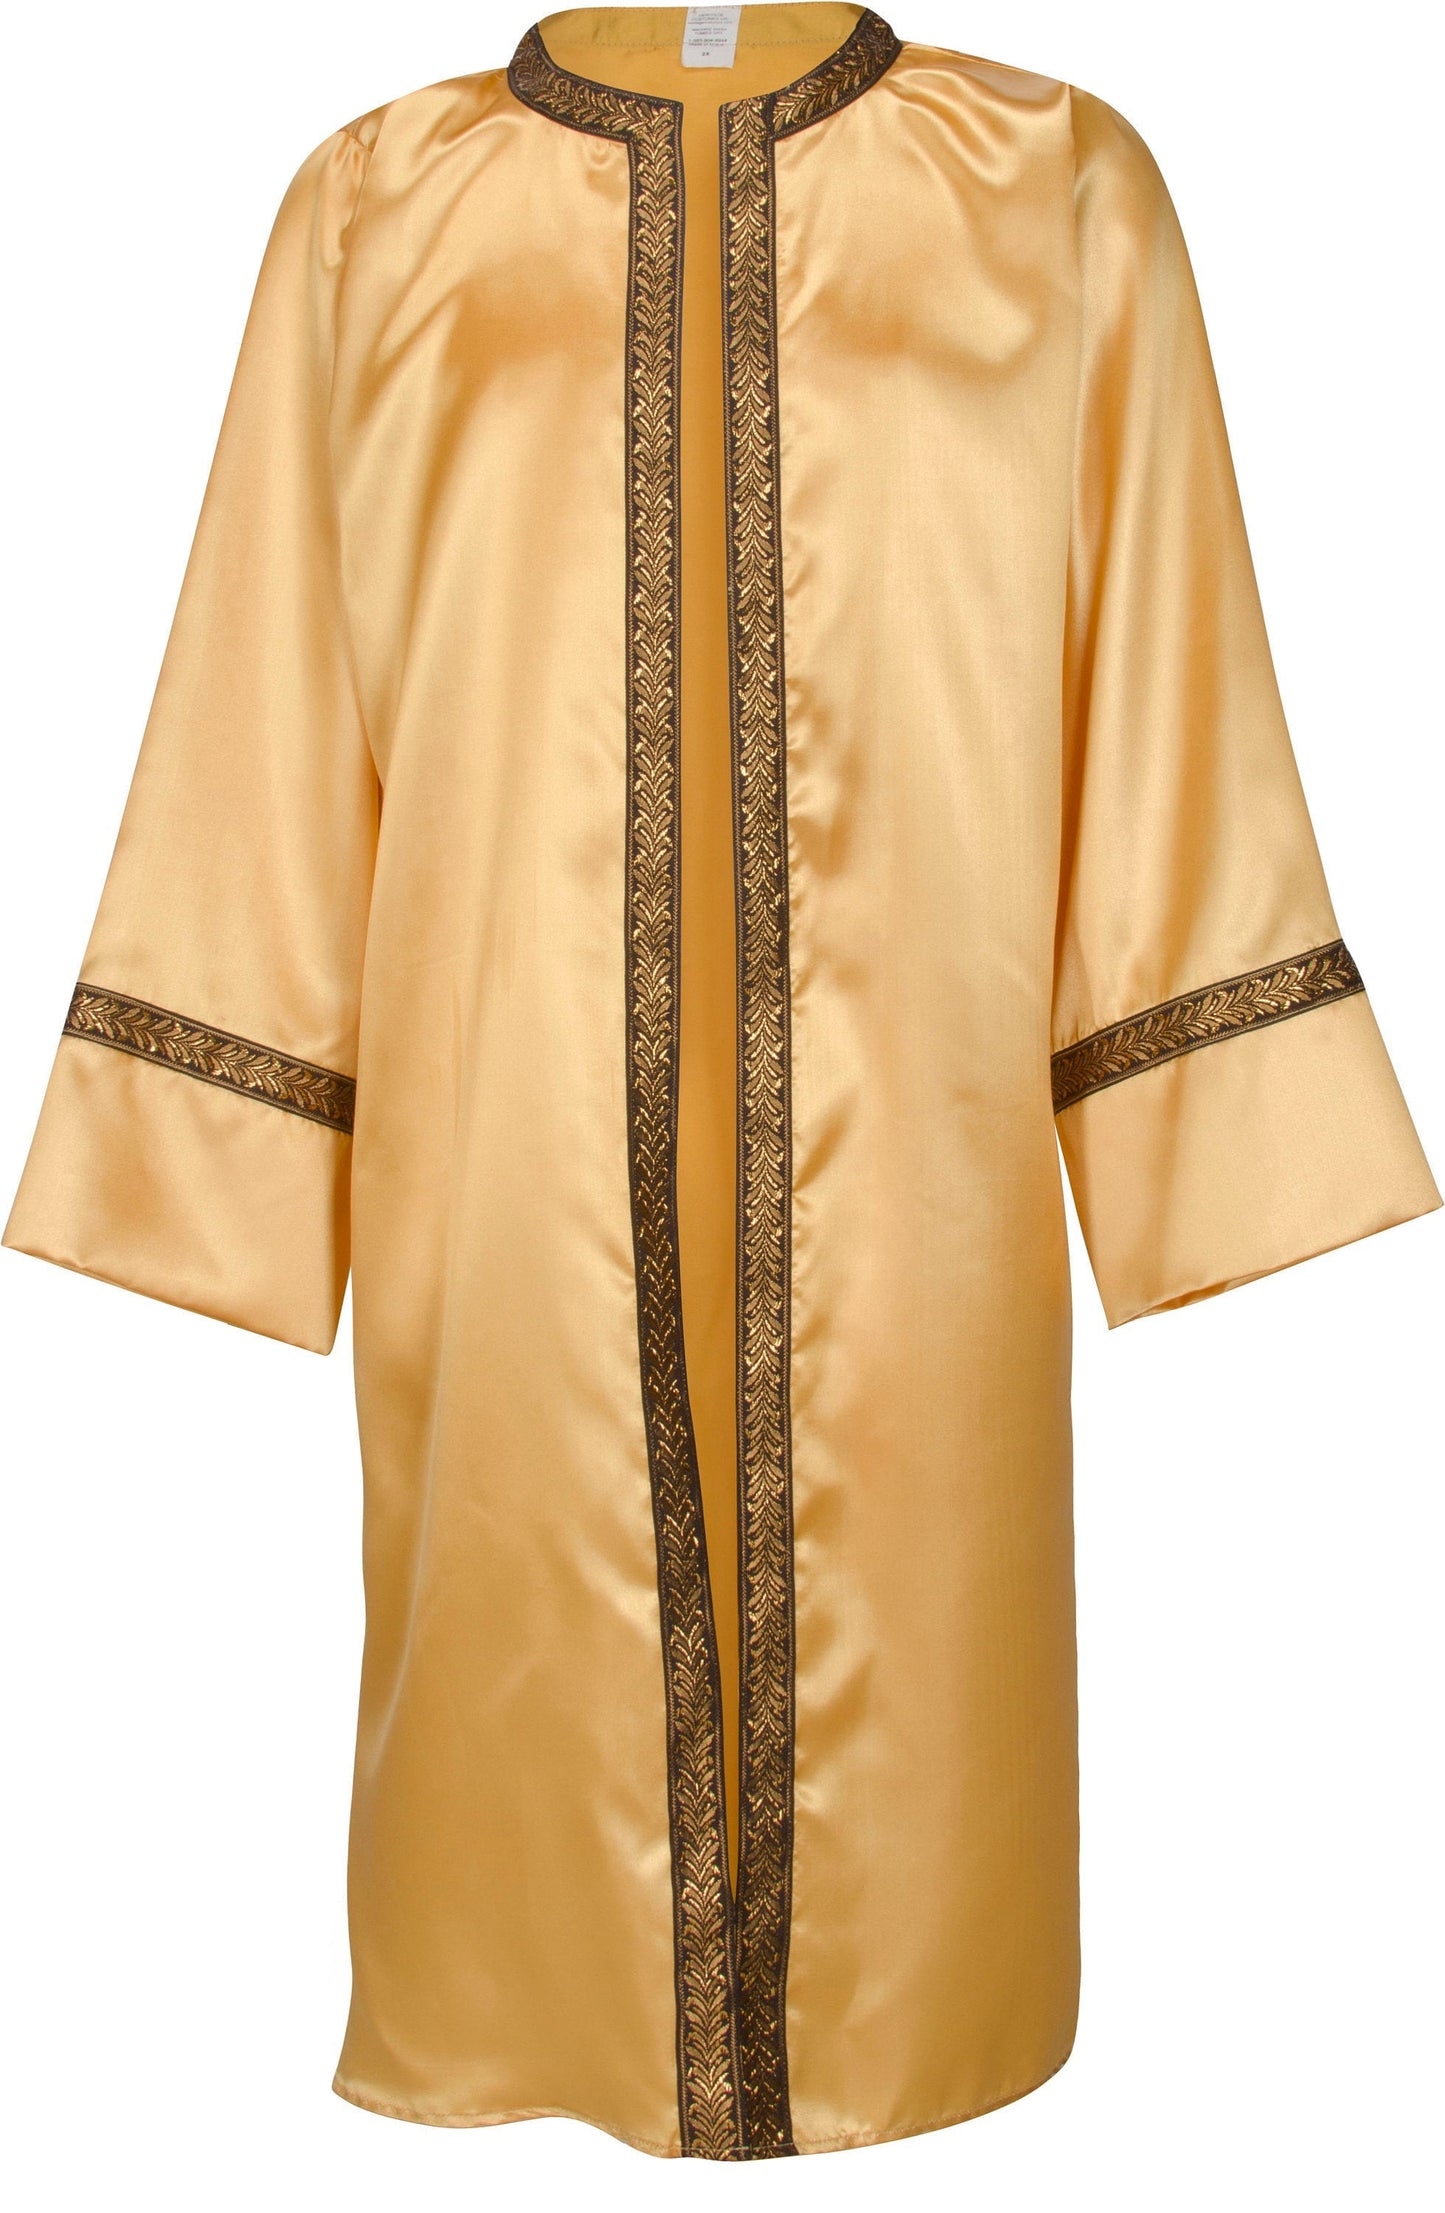 Children's Biblical Clothing Magi Robe